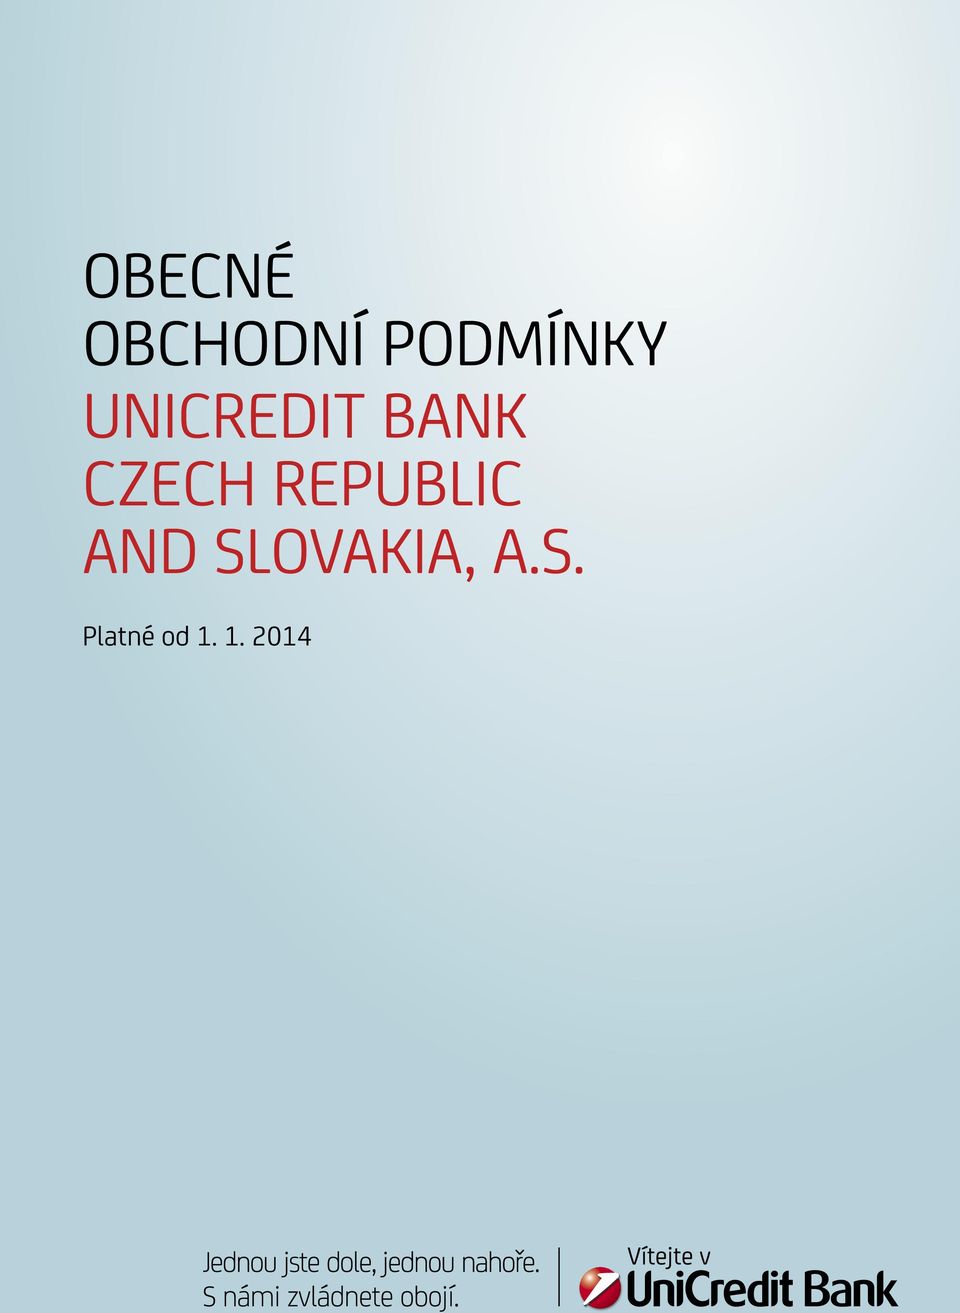 CZECH REPUBLIC AND